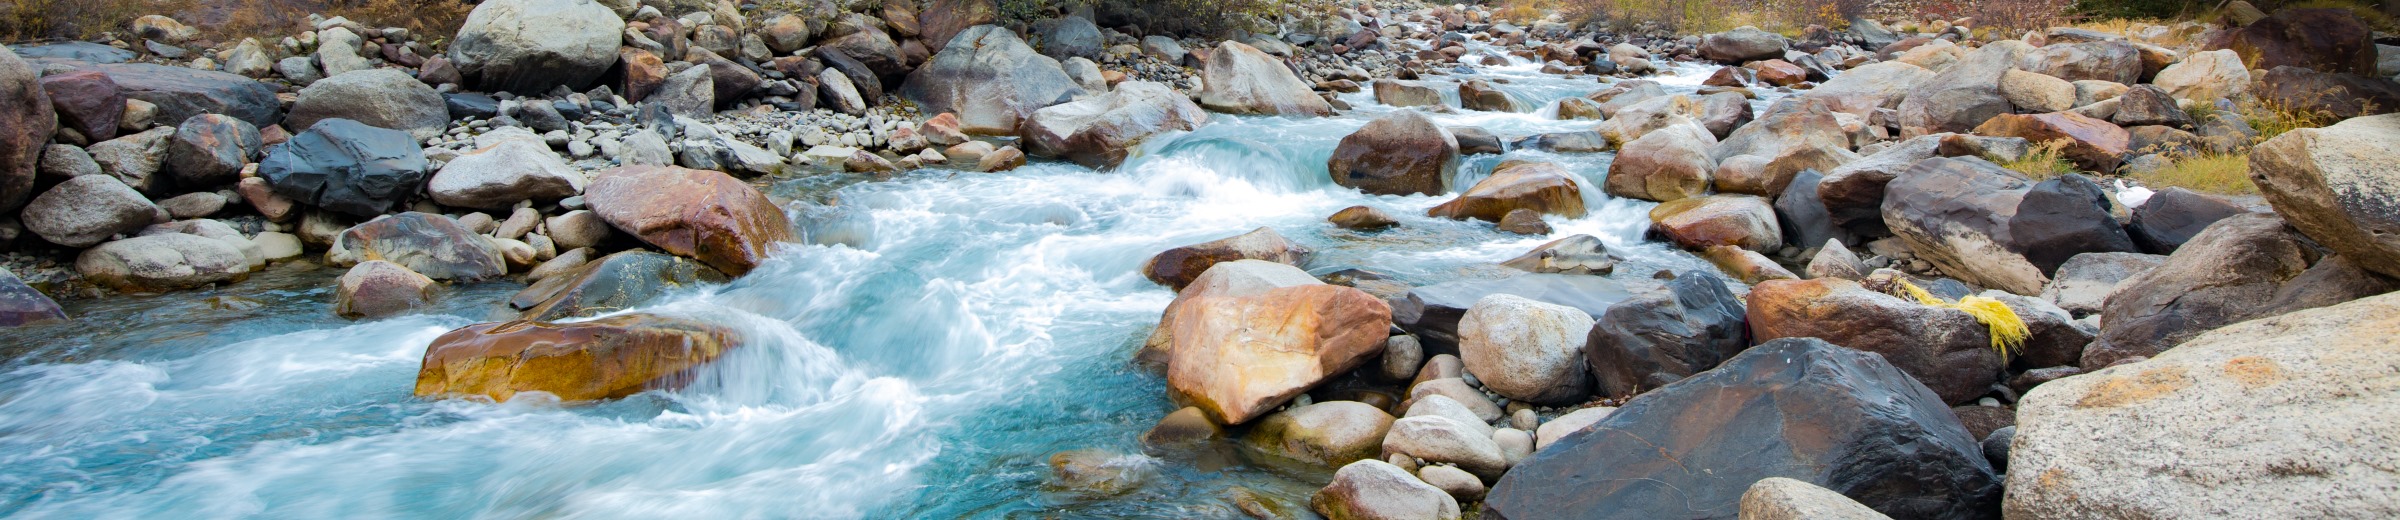 Río que fluye sobre rocas